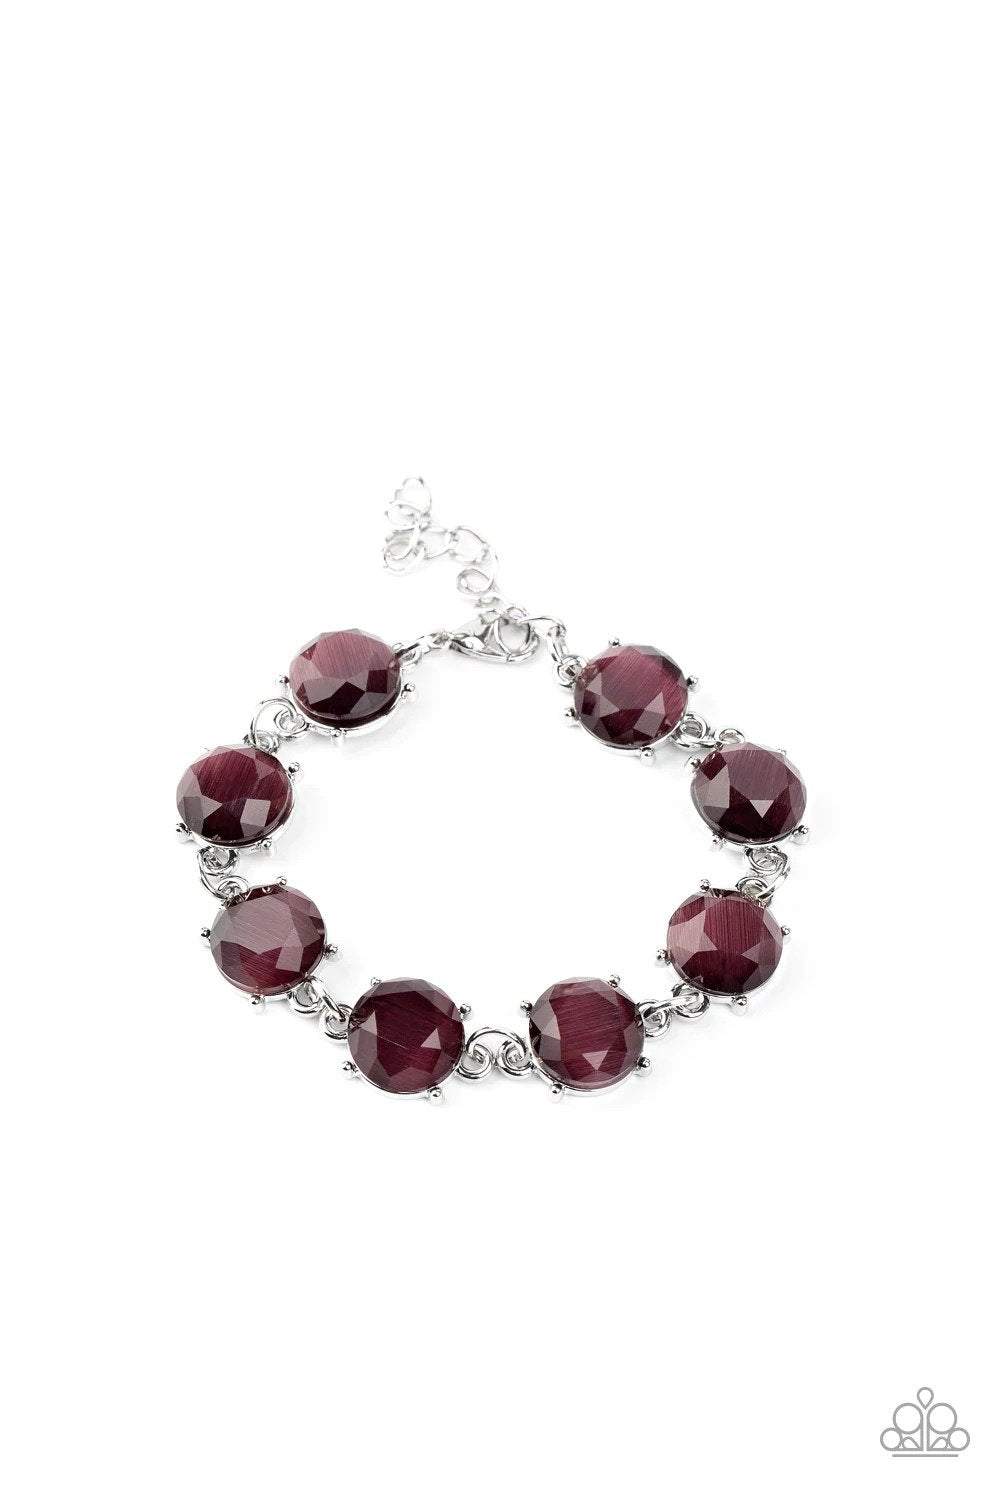 Ms. GLOW-It-All Purple Cat's Eye Bracelet - Paparazzi Accessories- lightbox - CarasShop.com - $5 Jewelry by Cara Jewels